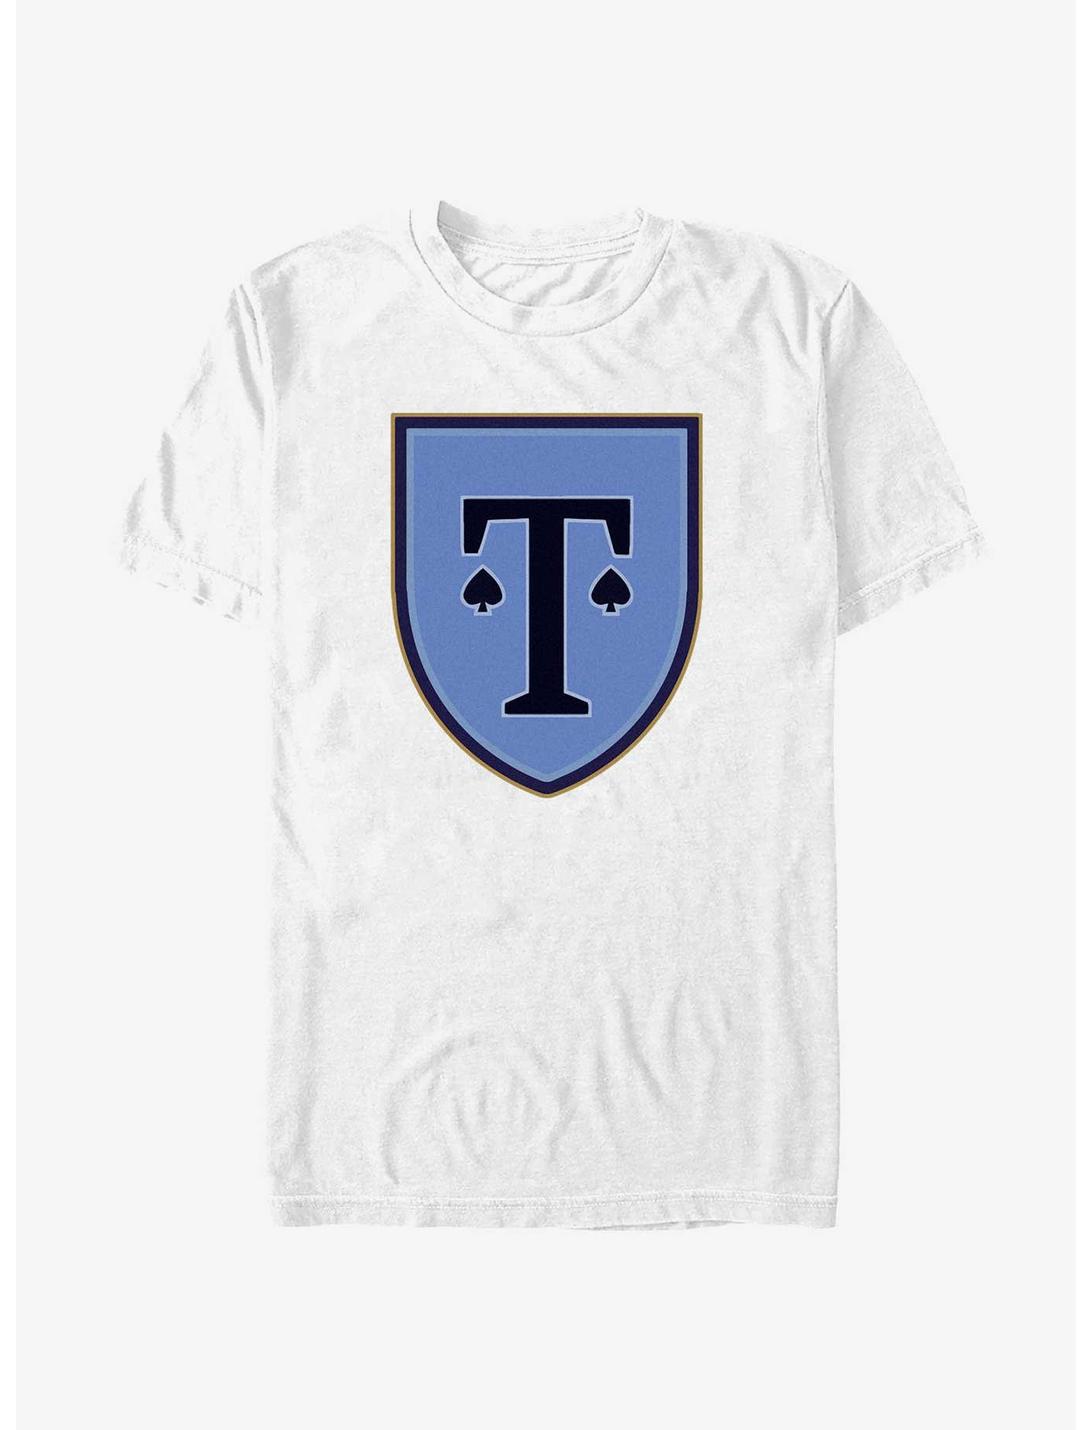 Heartstopper Truham School Crest T-Shirt, WHITE, hi-res